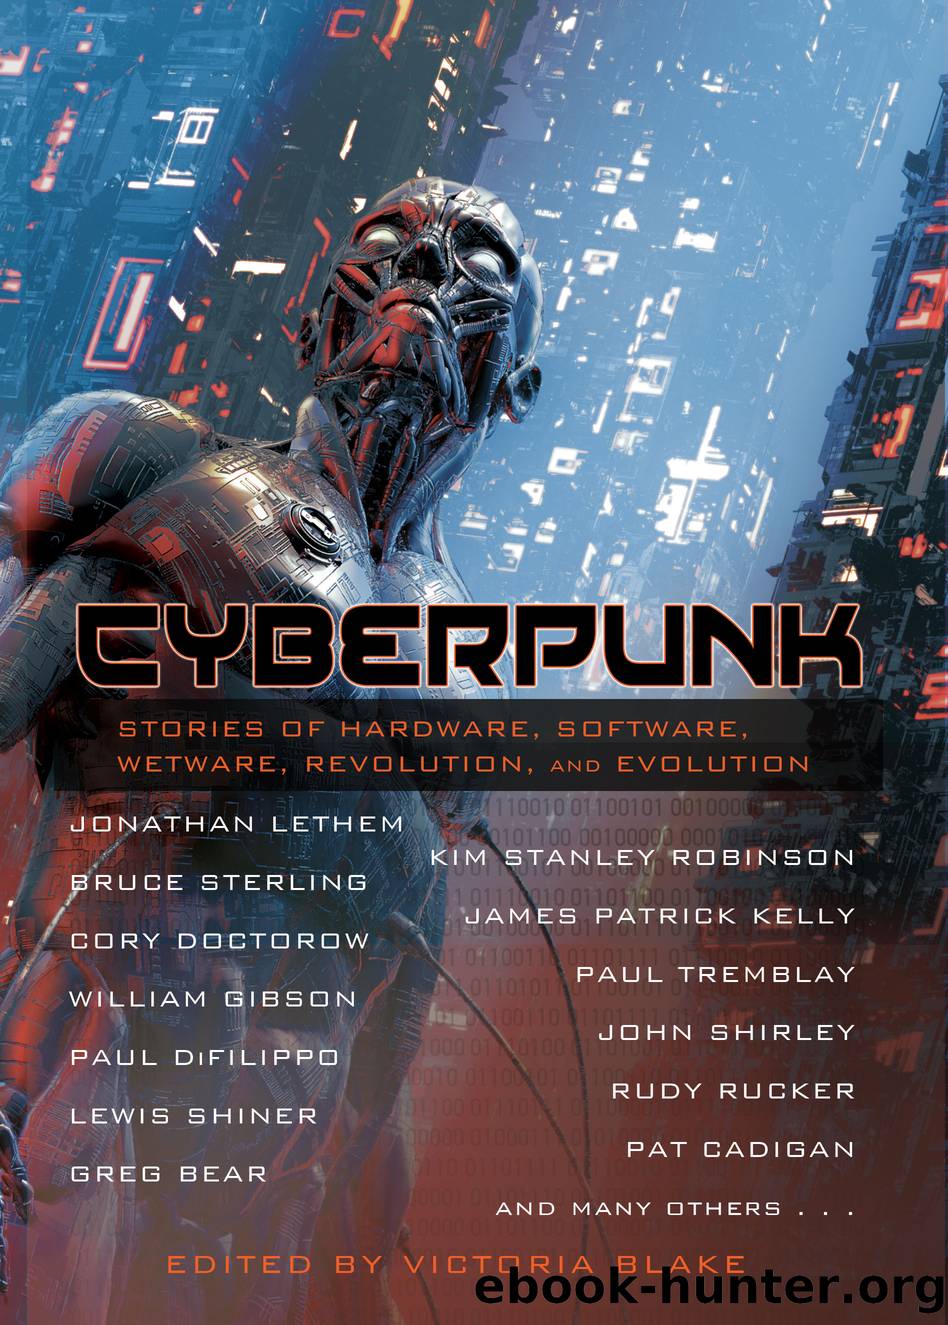 Cyberpunk by William Gibson